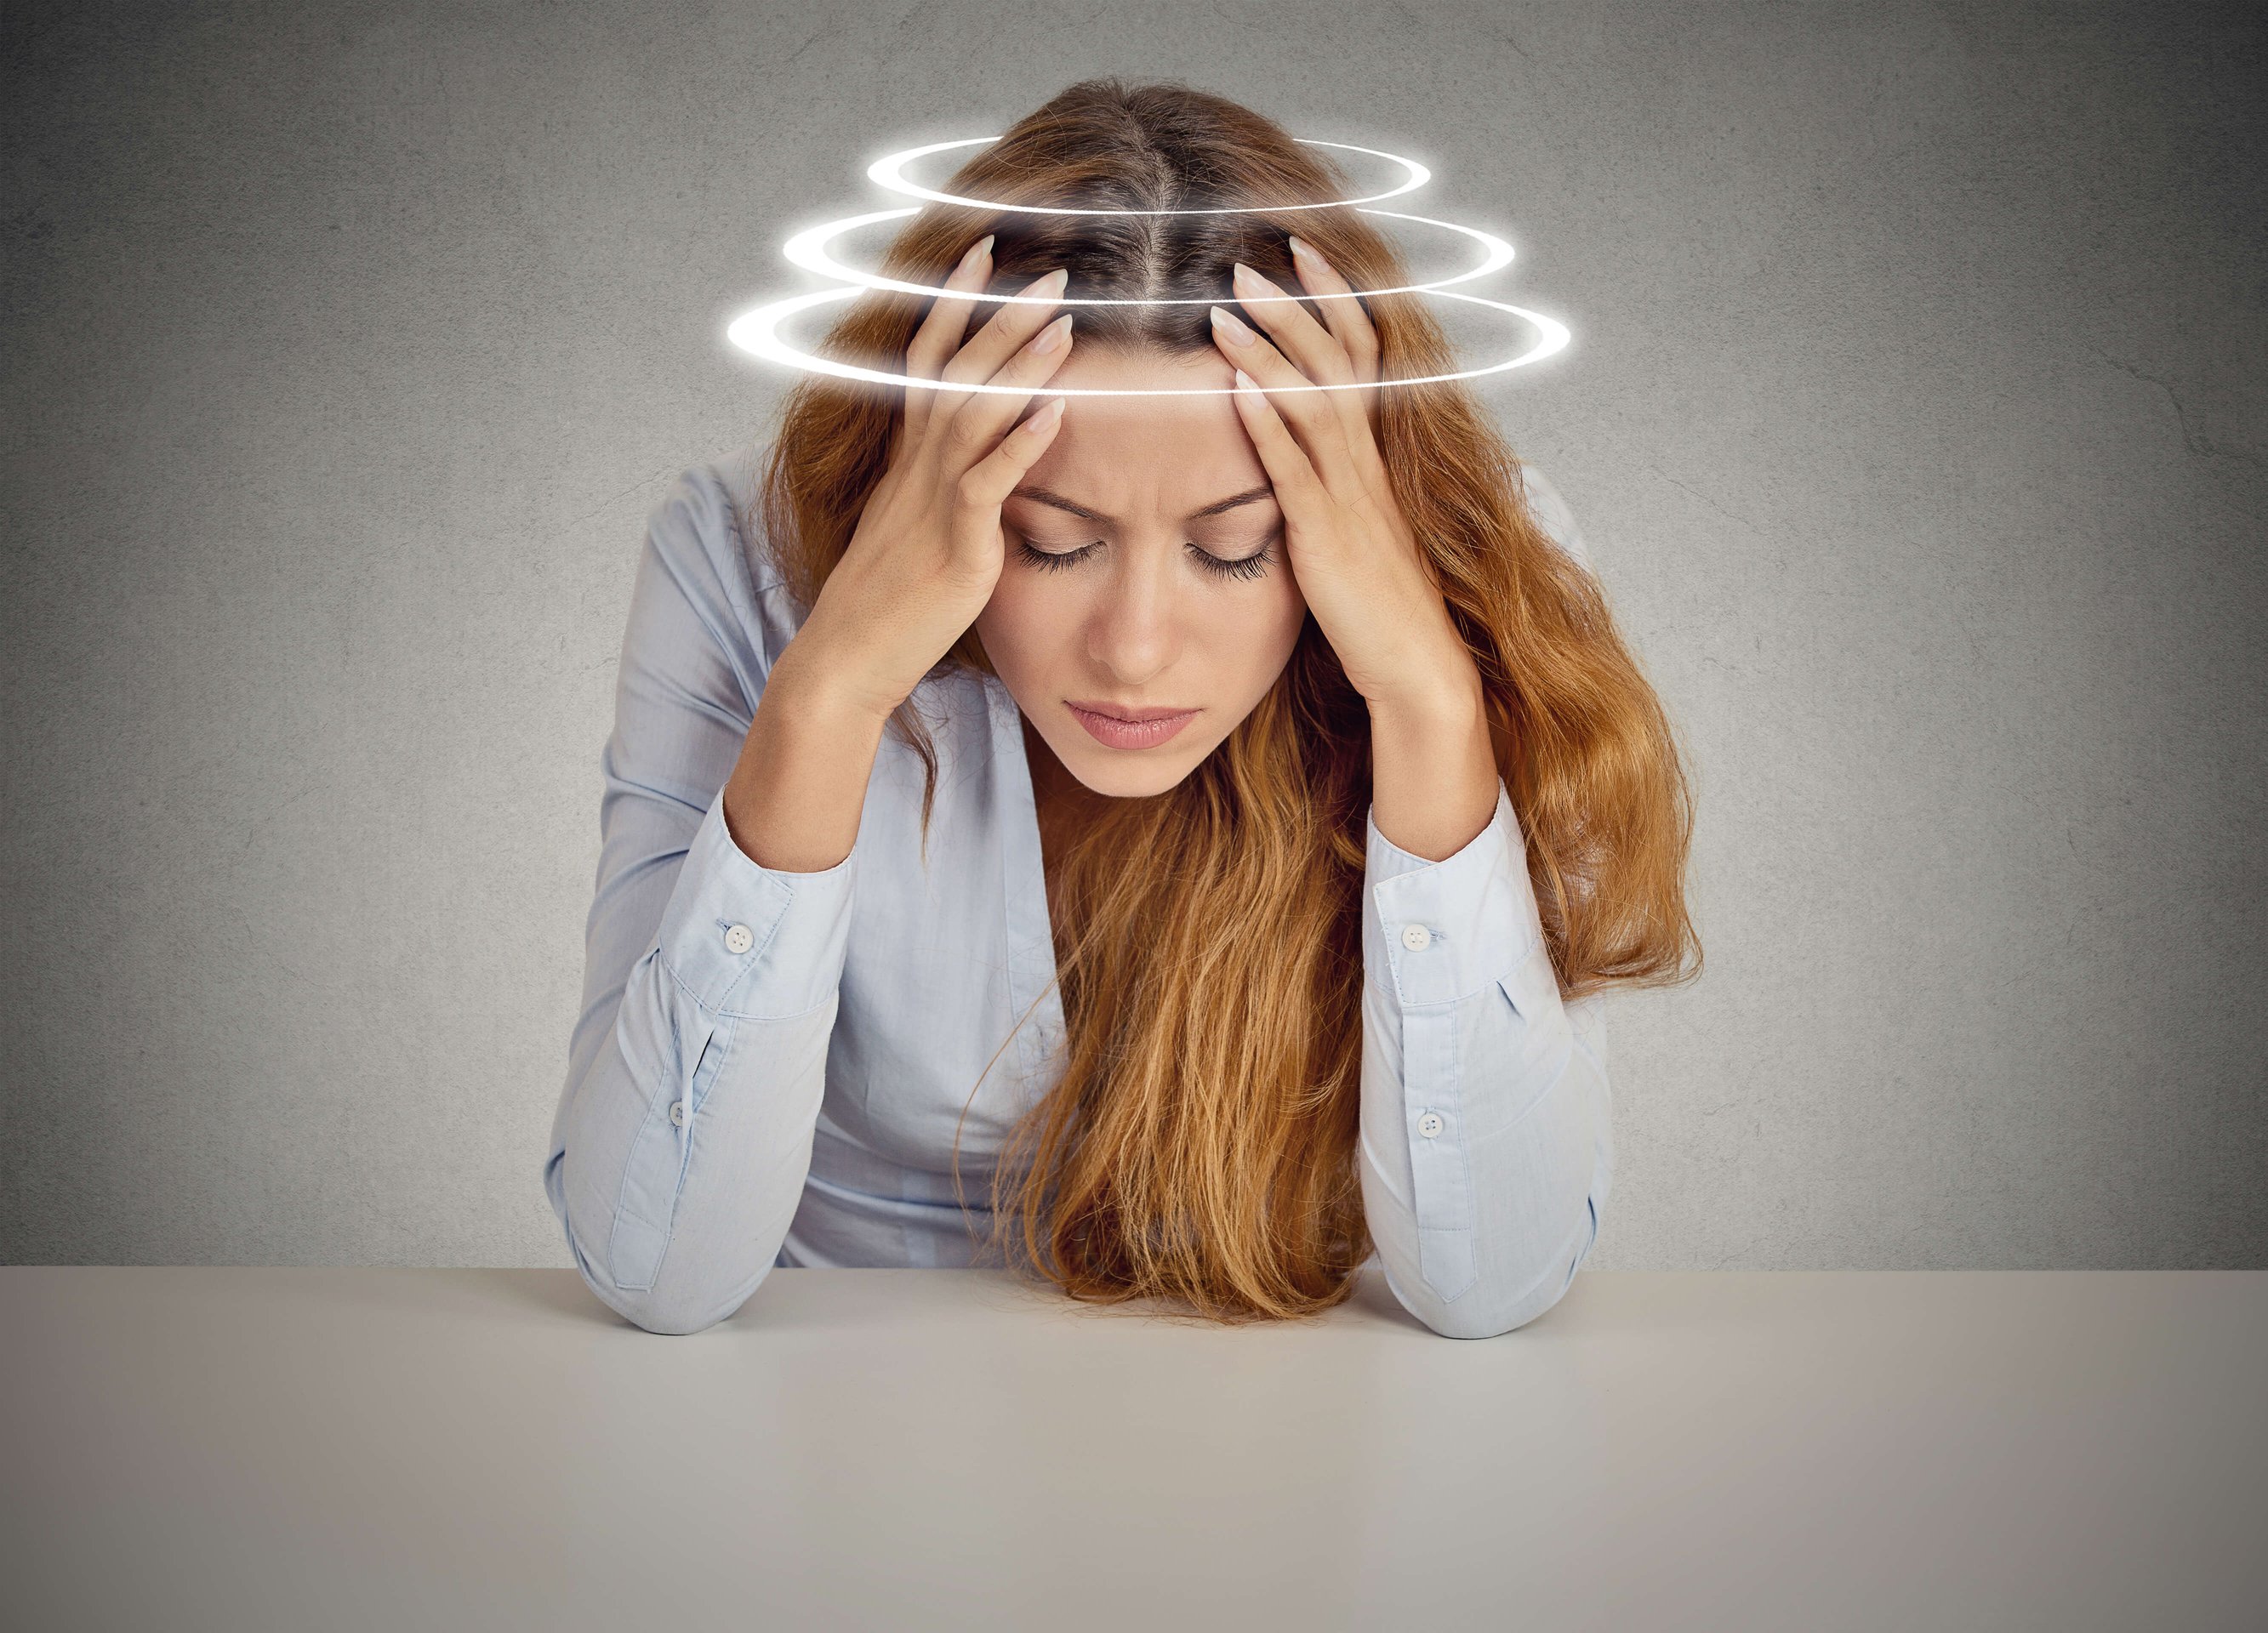 Vestibular Migraines Symptoms And Treatment Options